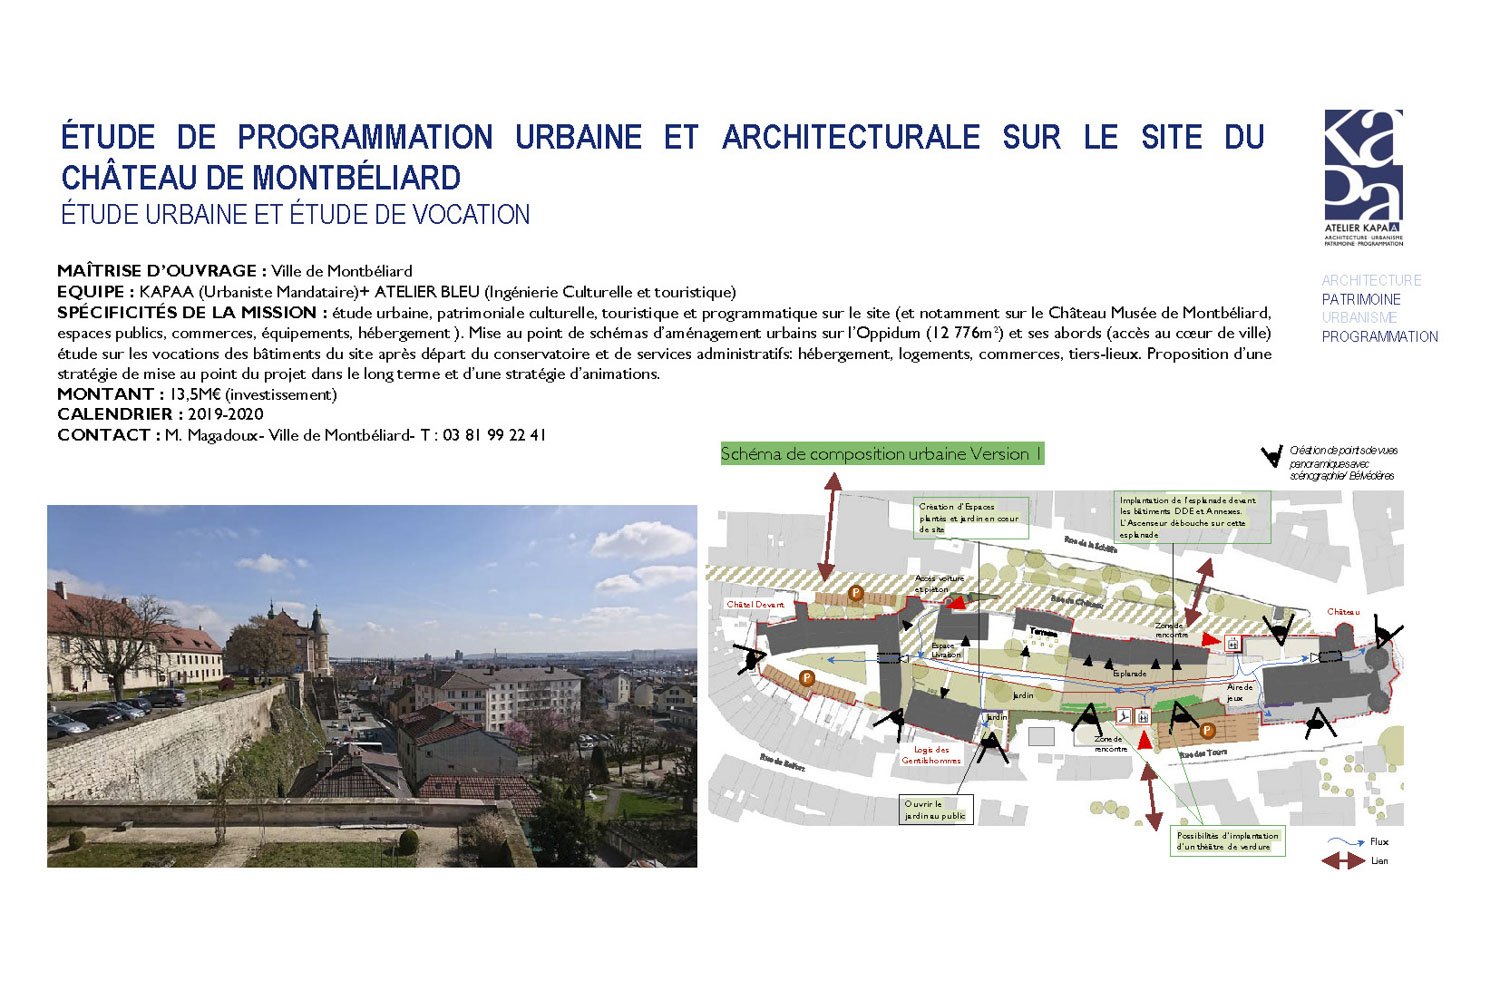 atelier-kapaa-architecture-patrimoine-urbanisme-programmation-site-du-chateau-montbeliard-01.jpg